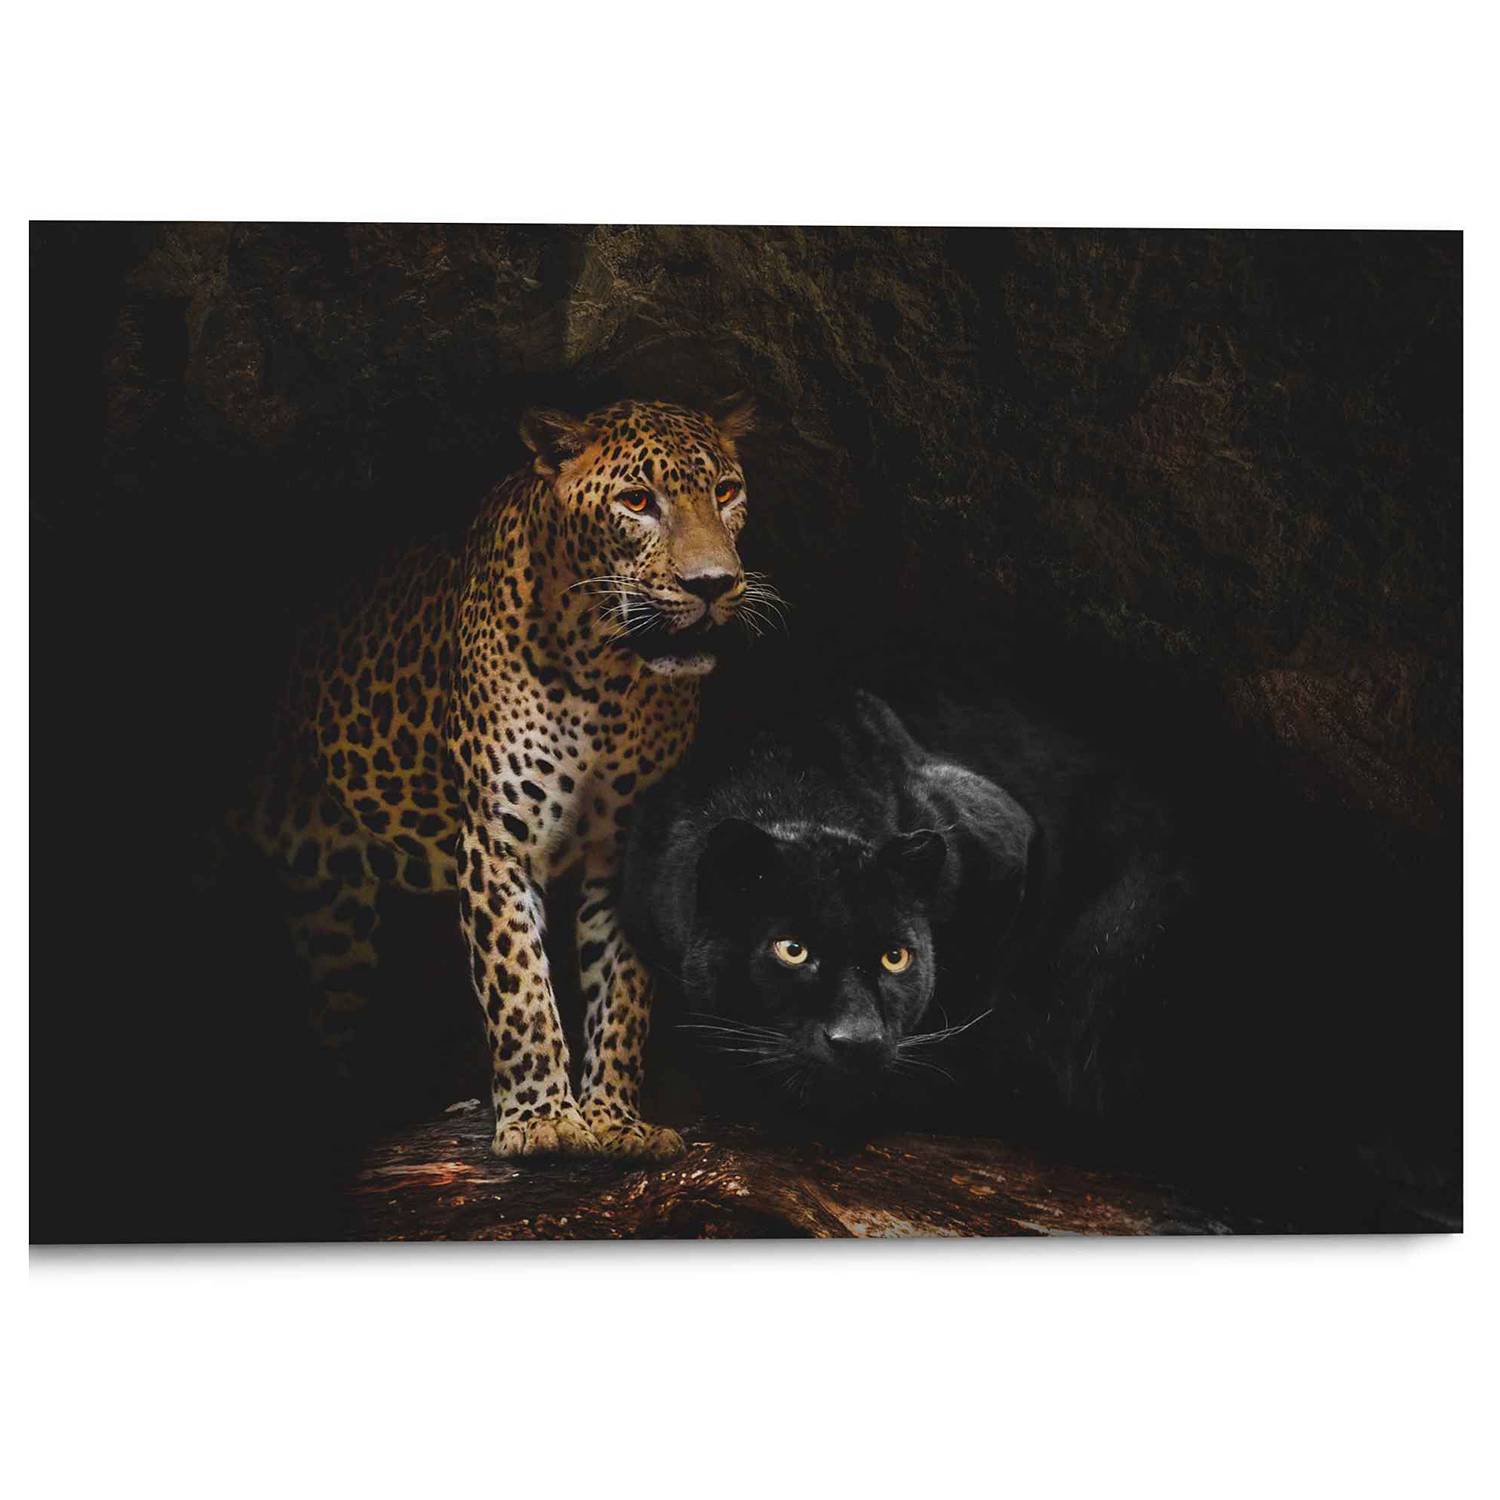 Wandbild Raubtiere Panther kaufen | home24